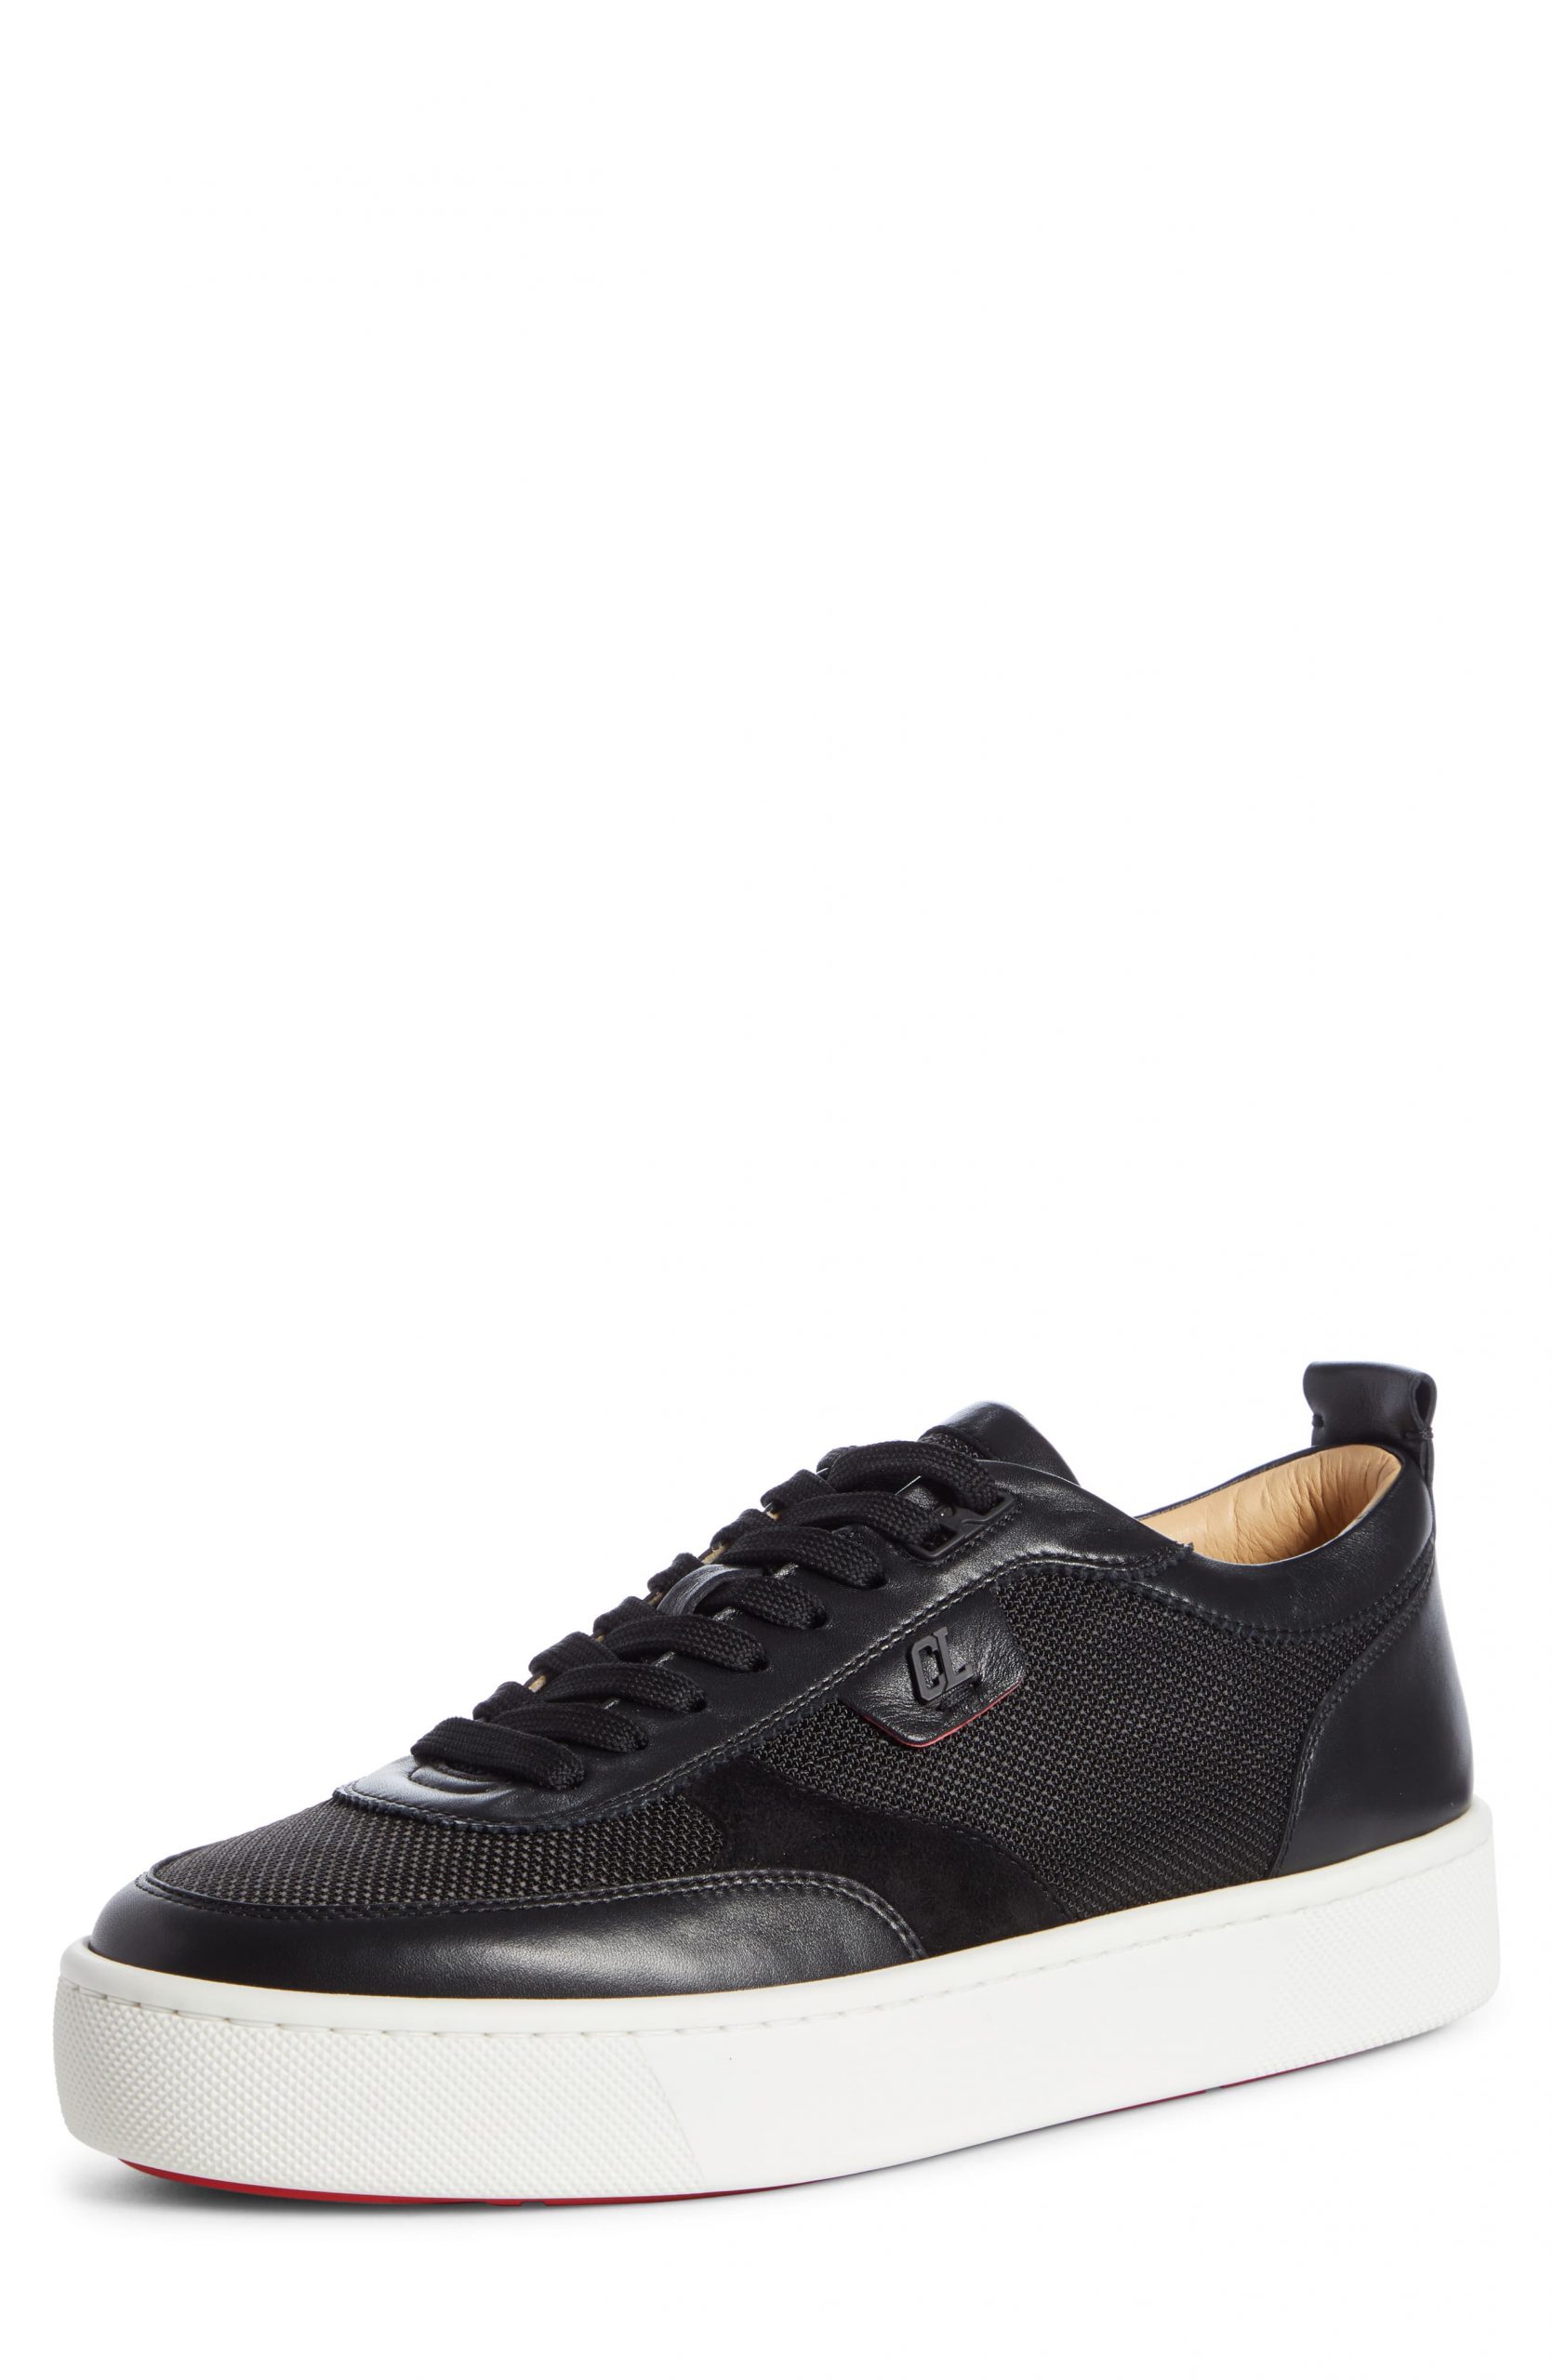 Men’s Christian Louboutin Happyrui Sneaker, Size 8US - Black | Fashion ...